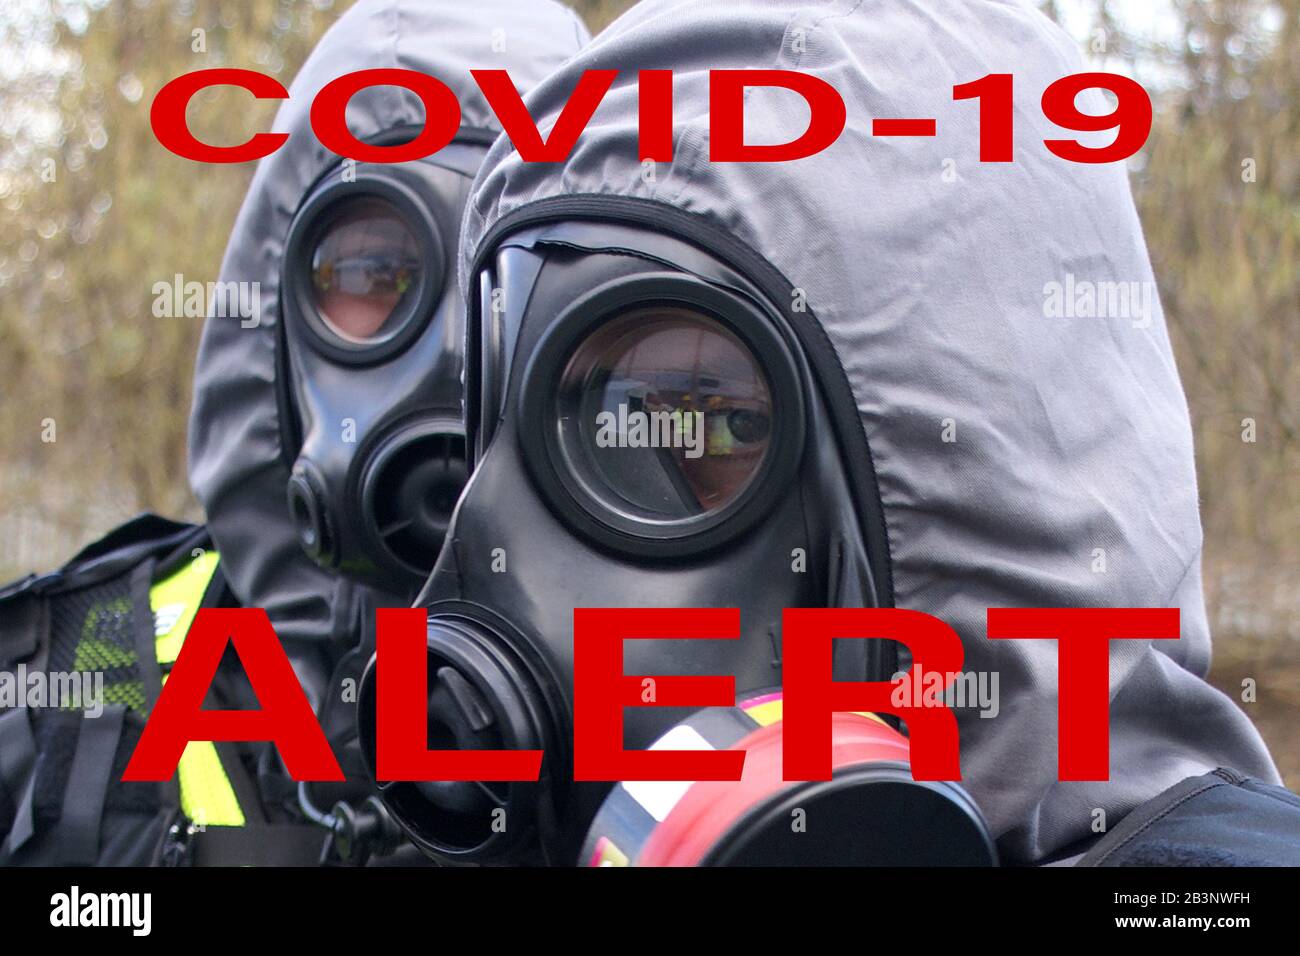 COVID-19 Alert Stock Photo